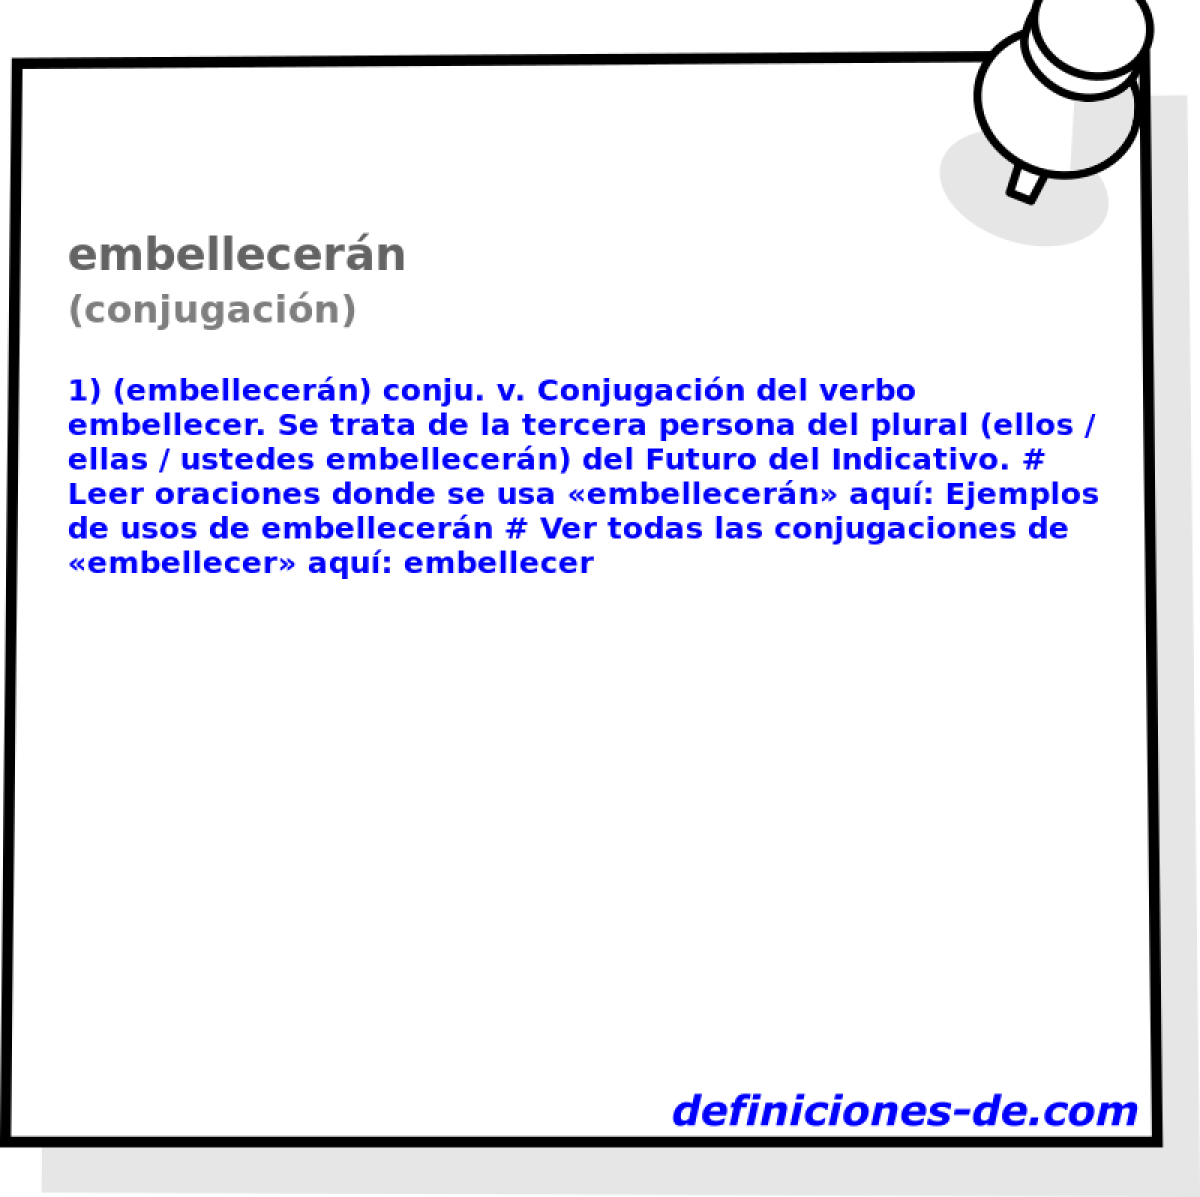 embellecern (conjugacin)